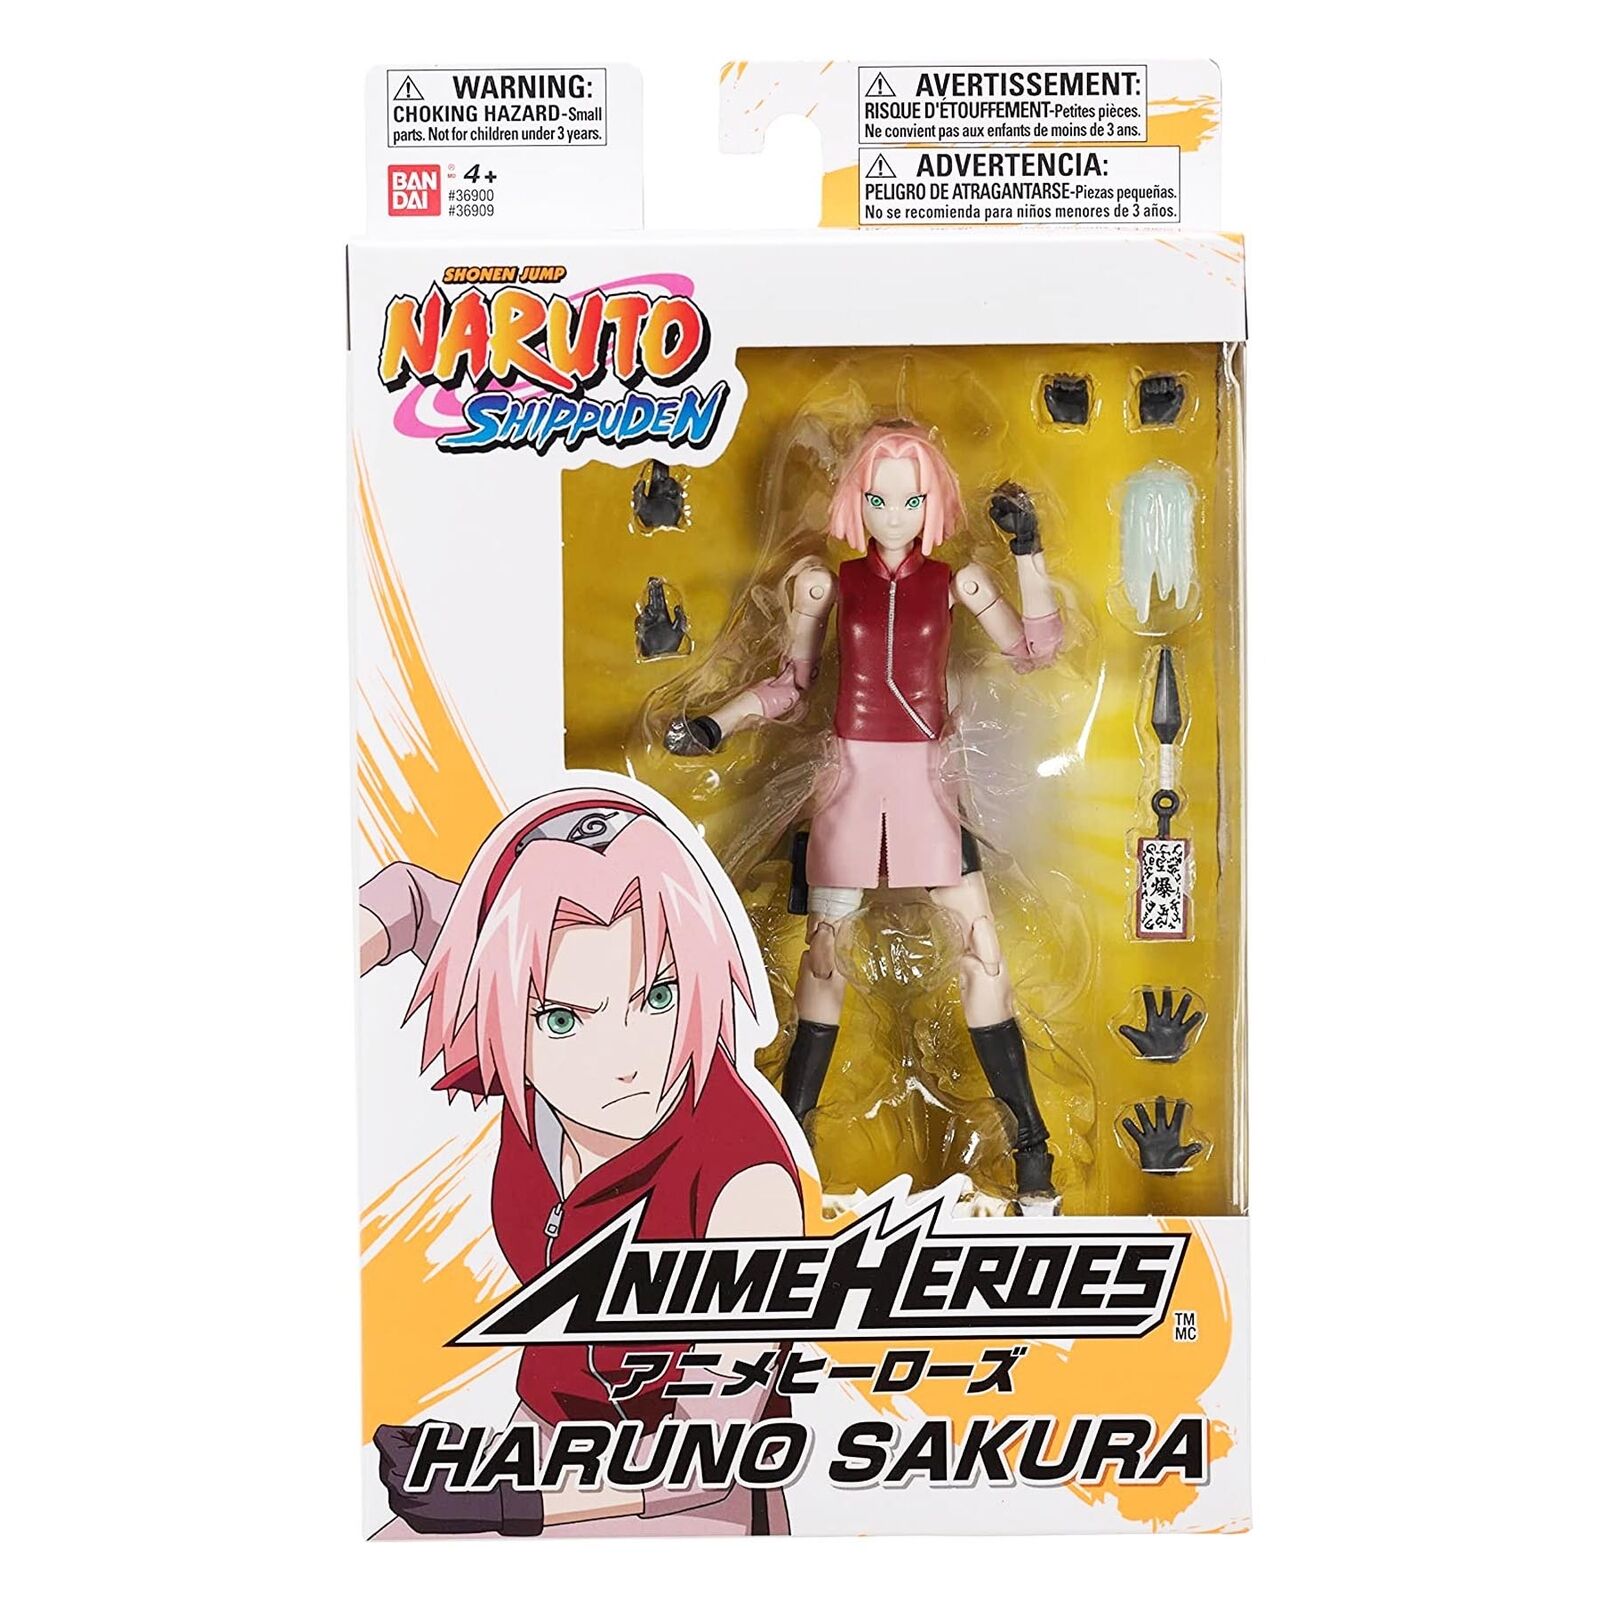 Anime Heroes Naruto - Gaara - Gamepads - AliExpress